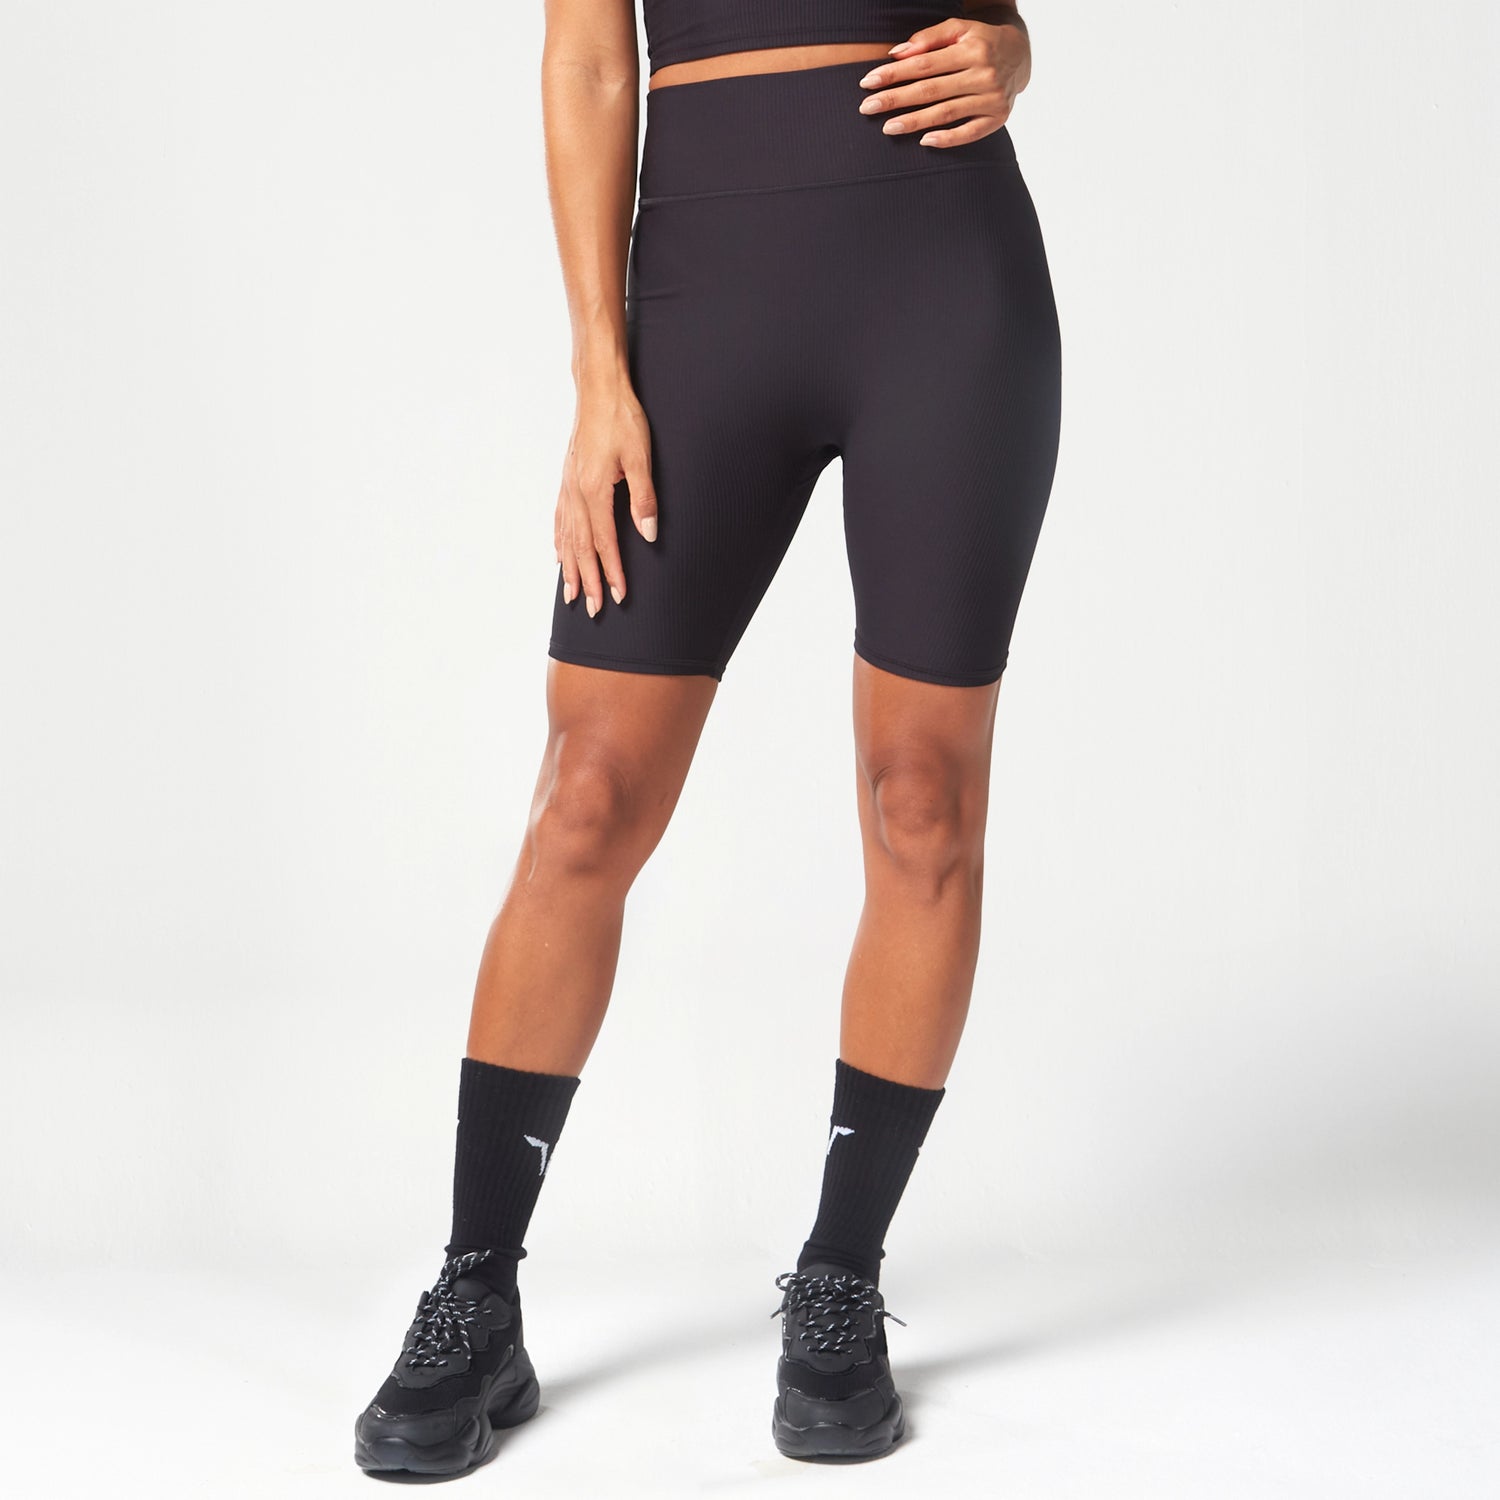 AE, Code Ribbed Biker Shorts - Black, Workout Shorts Women